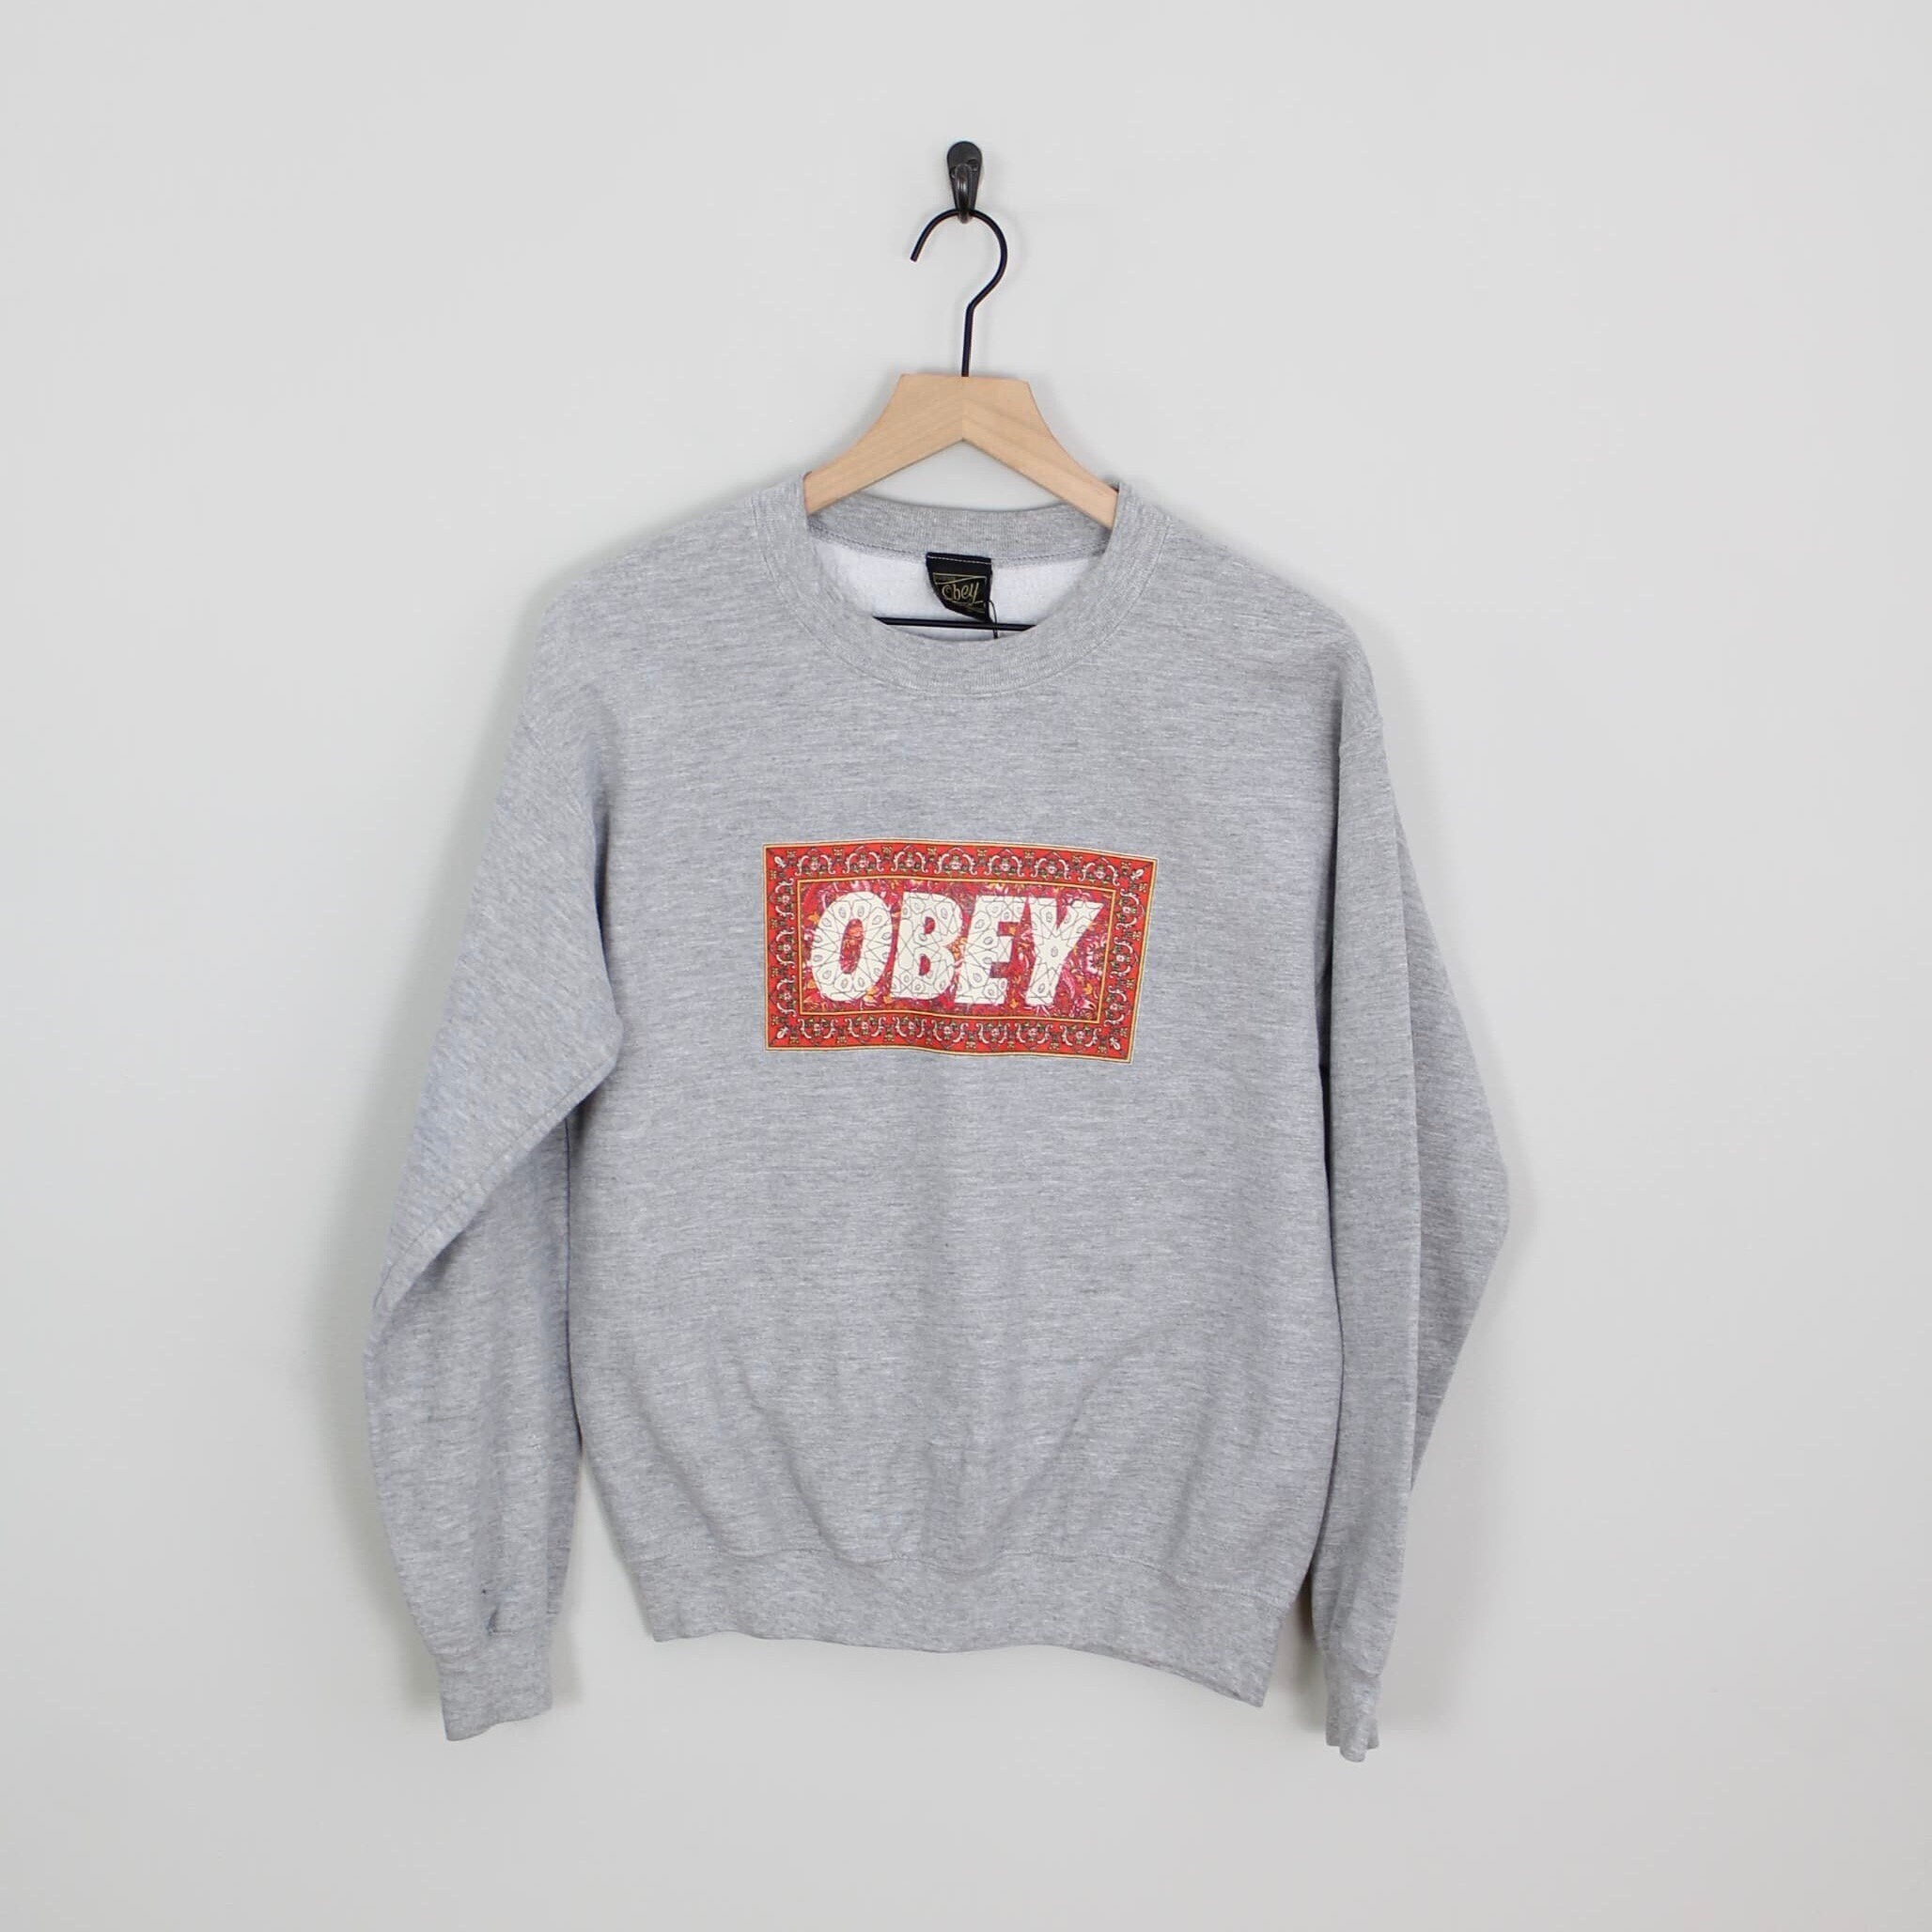 Vintage 90s Obey Crewneck Sweatshirt Size -